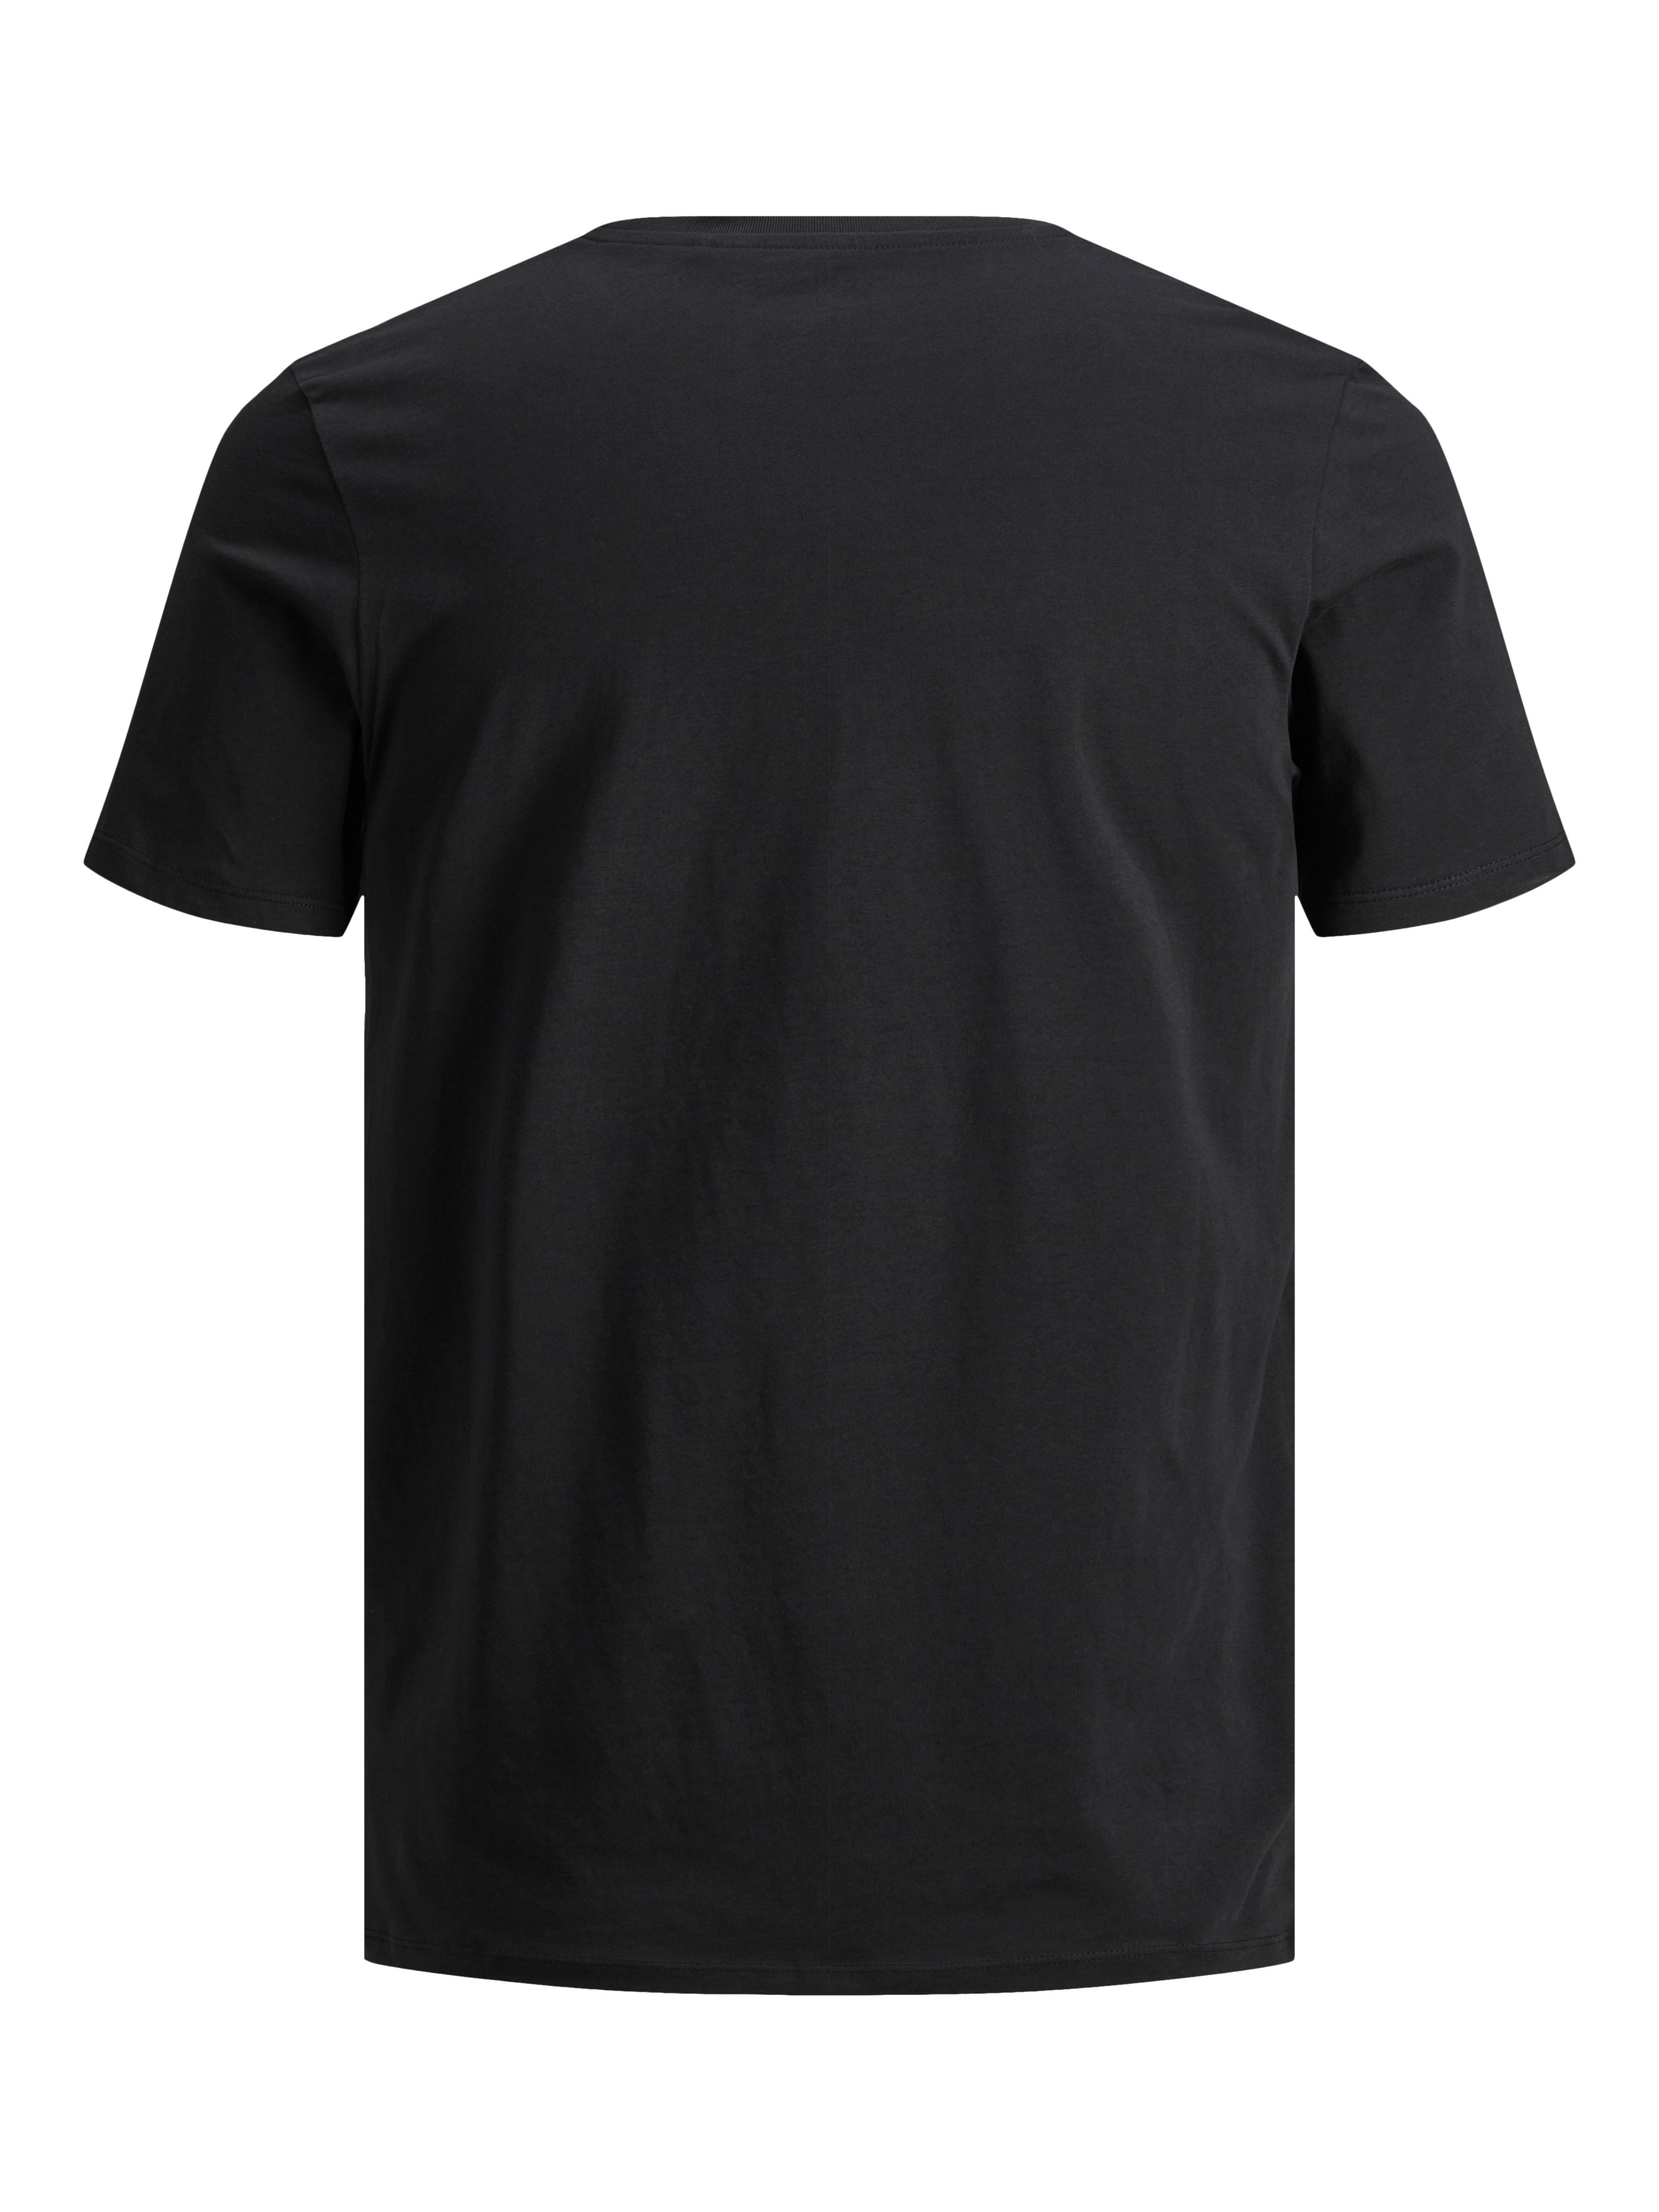 Jack & Jones - Cotton T-shirt, Black, large image number 1